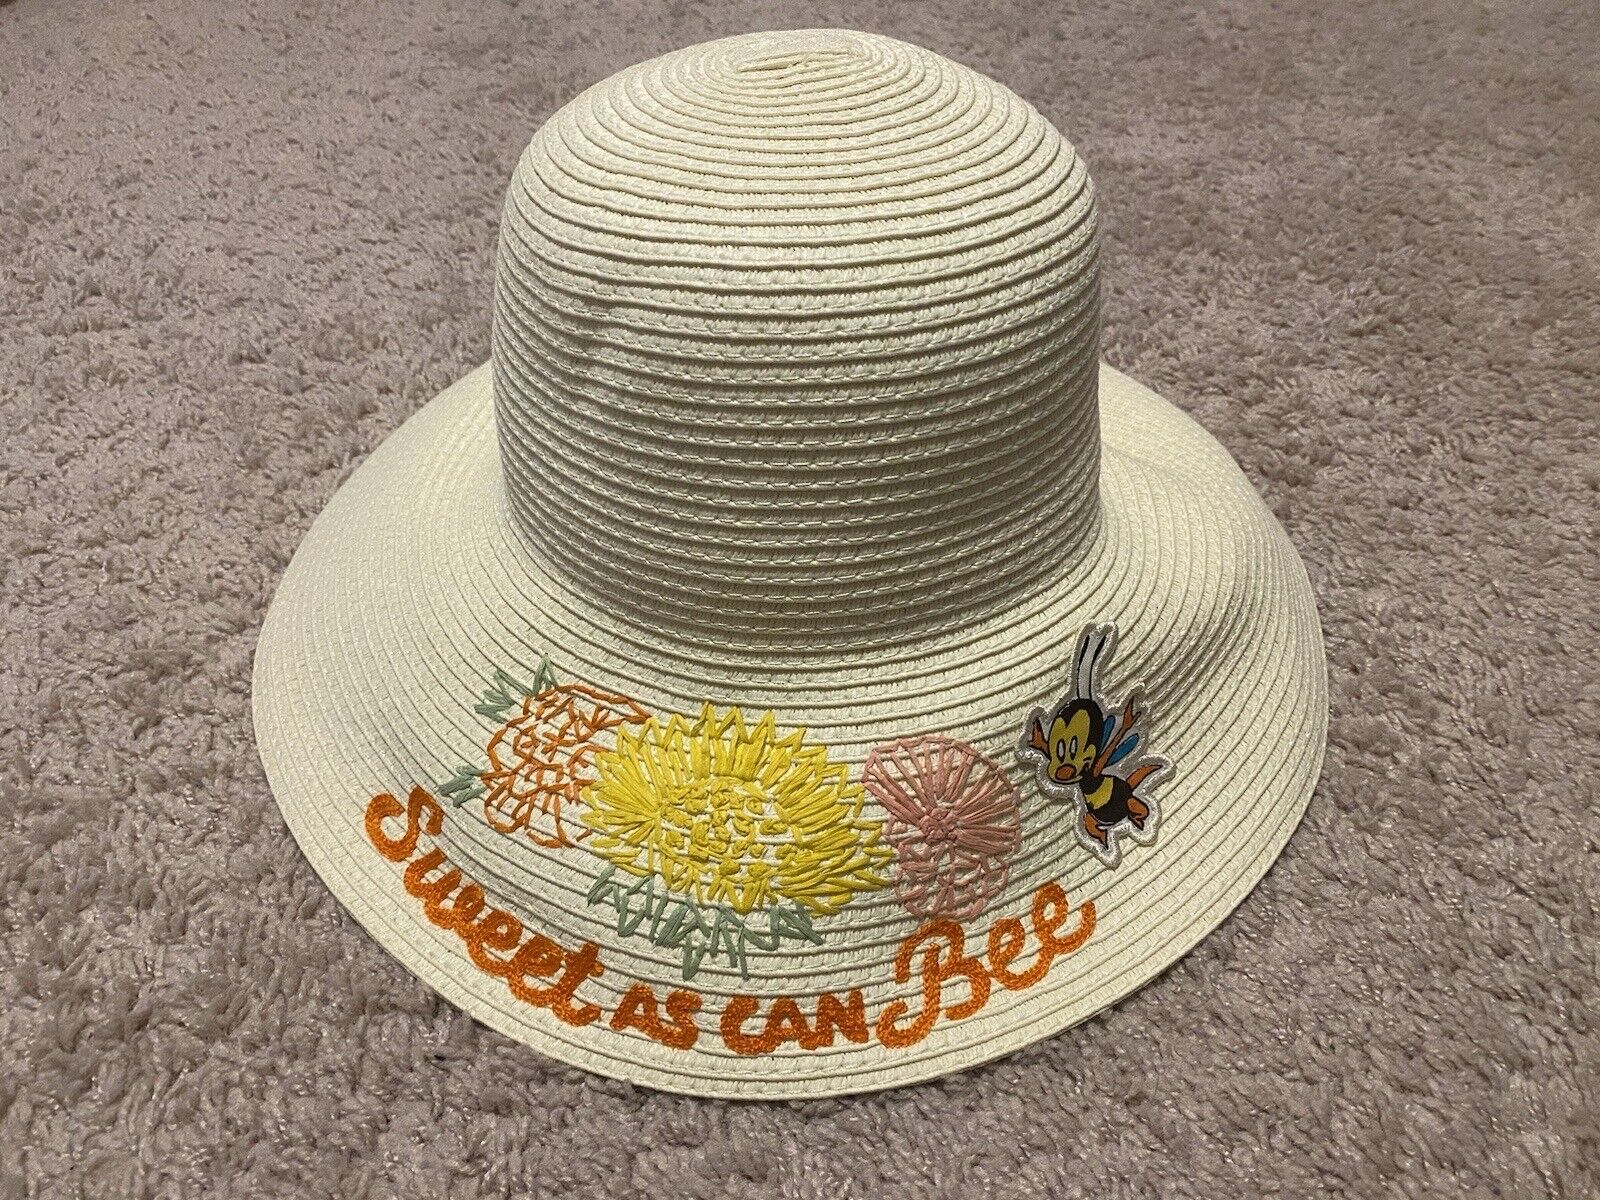 NWOT Disney Parks EPCOT Flower & Garden Festival 2020 Spike Bee Floppy Sun Hat